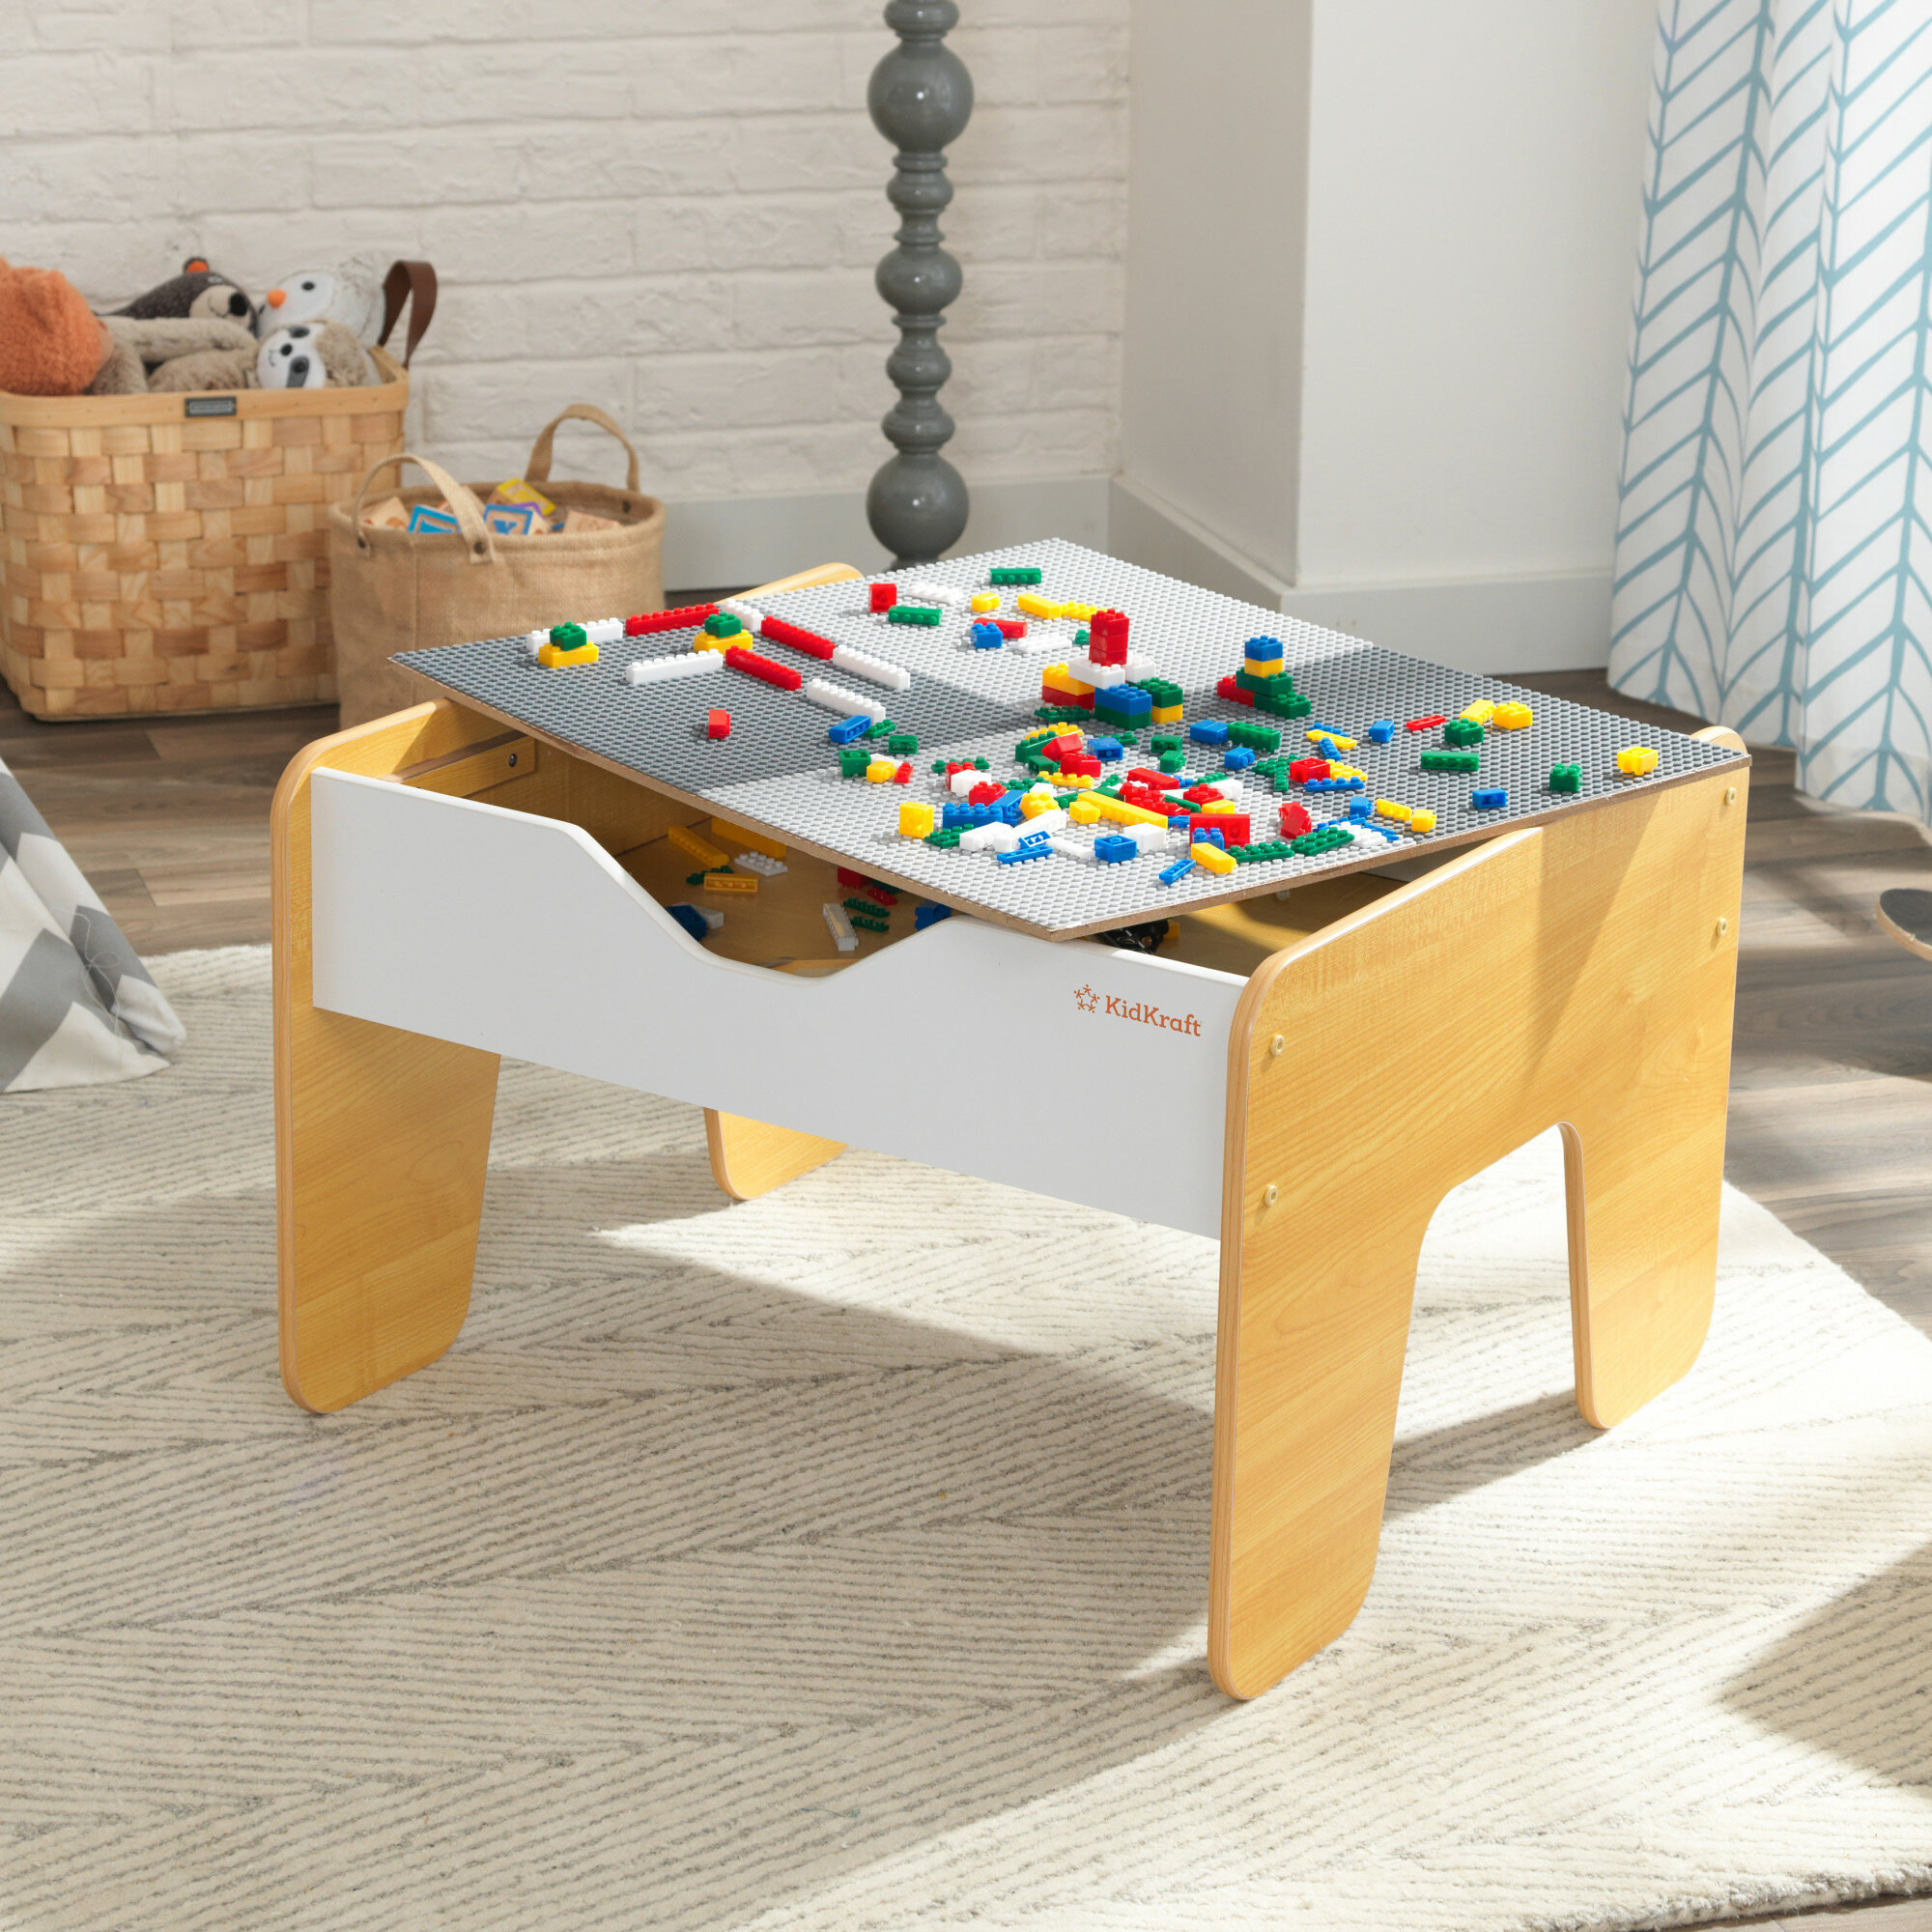 kidkraft lego table with storage